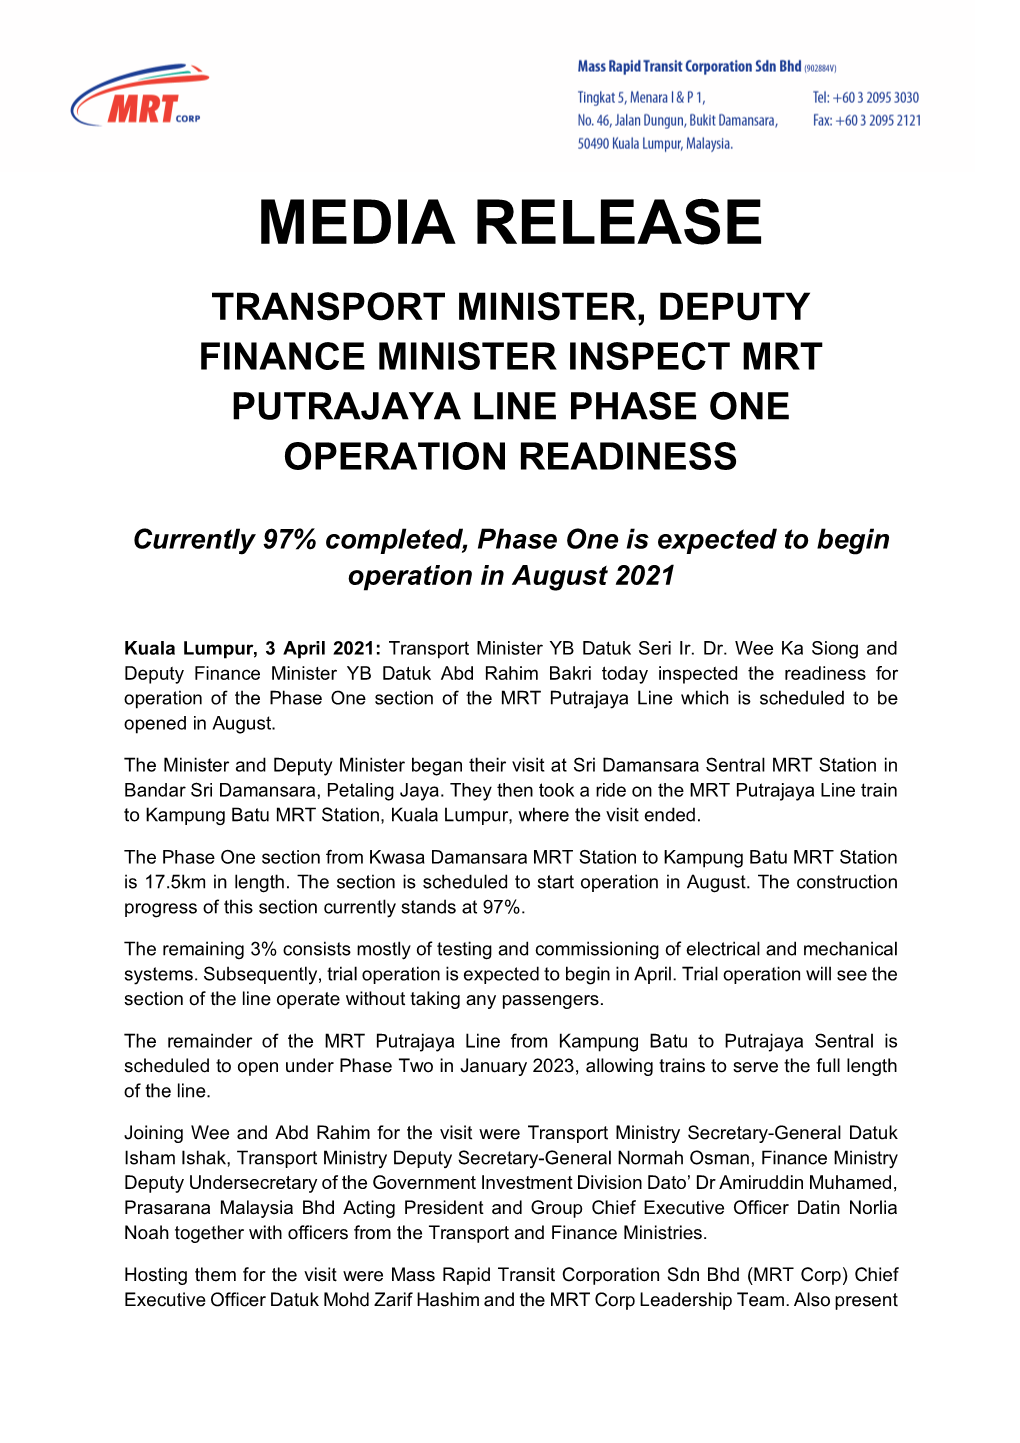 Media Release Transport Minister, Deputy Finance Minister Inspect Mrt Putrajaya Line Phase One Operation Readiness